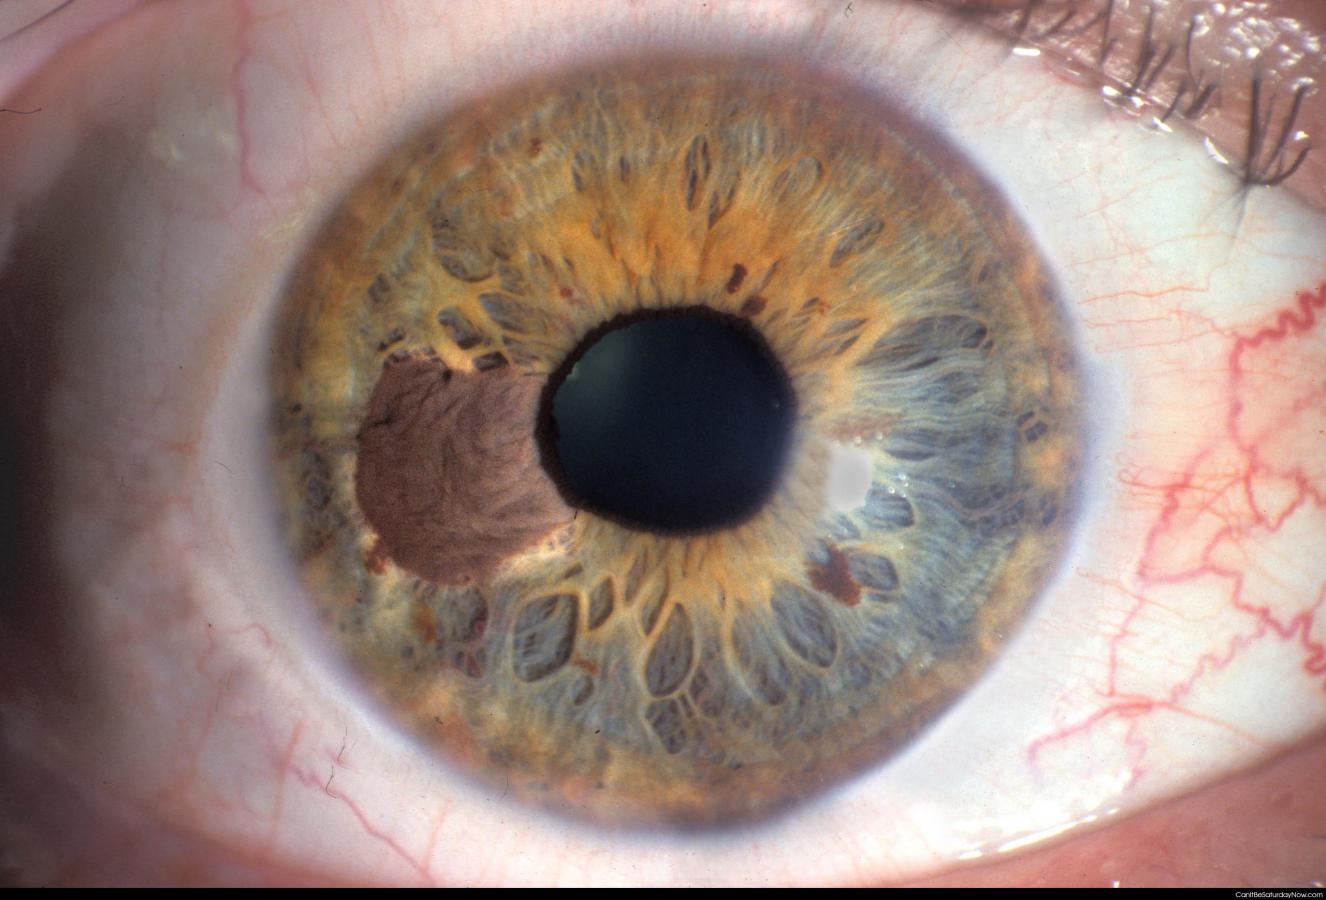 Eye 2 - close up of an eye